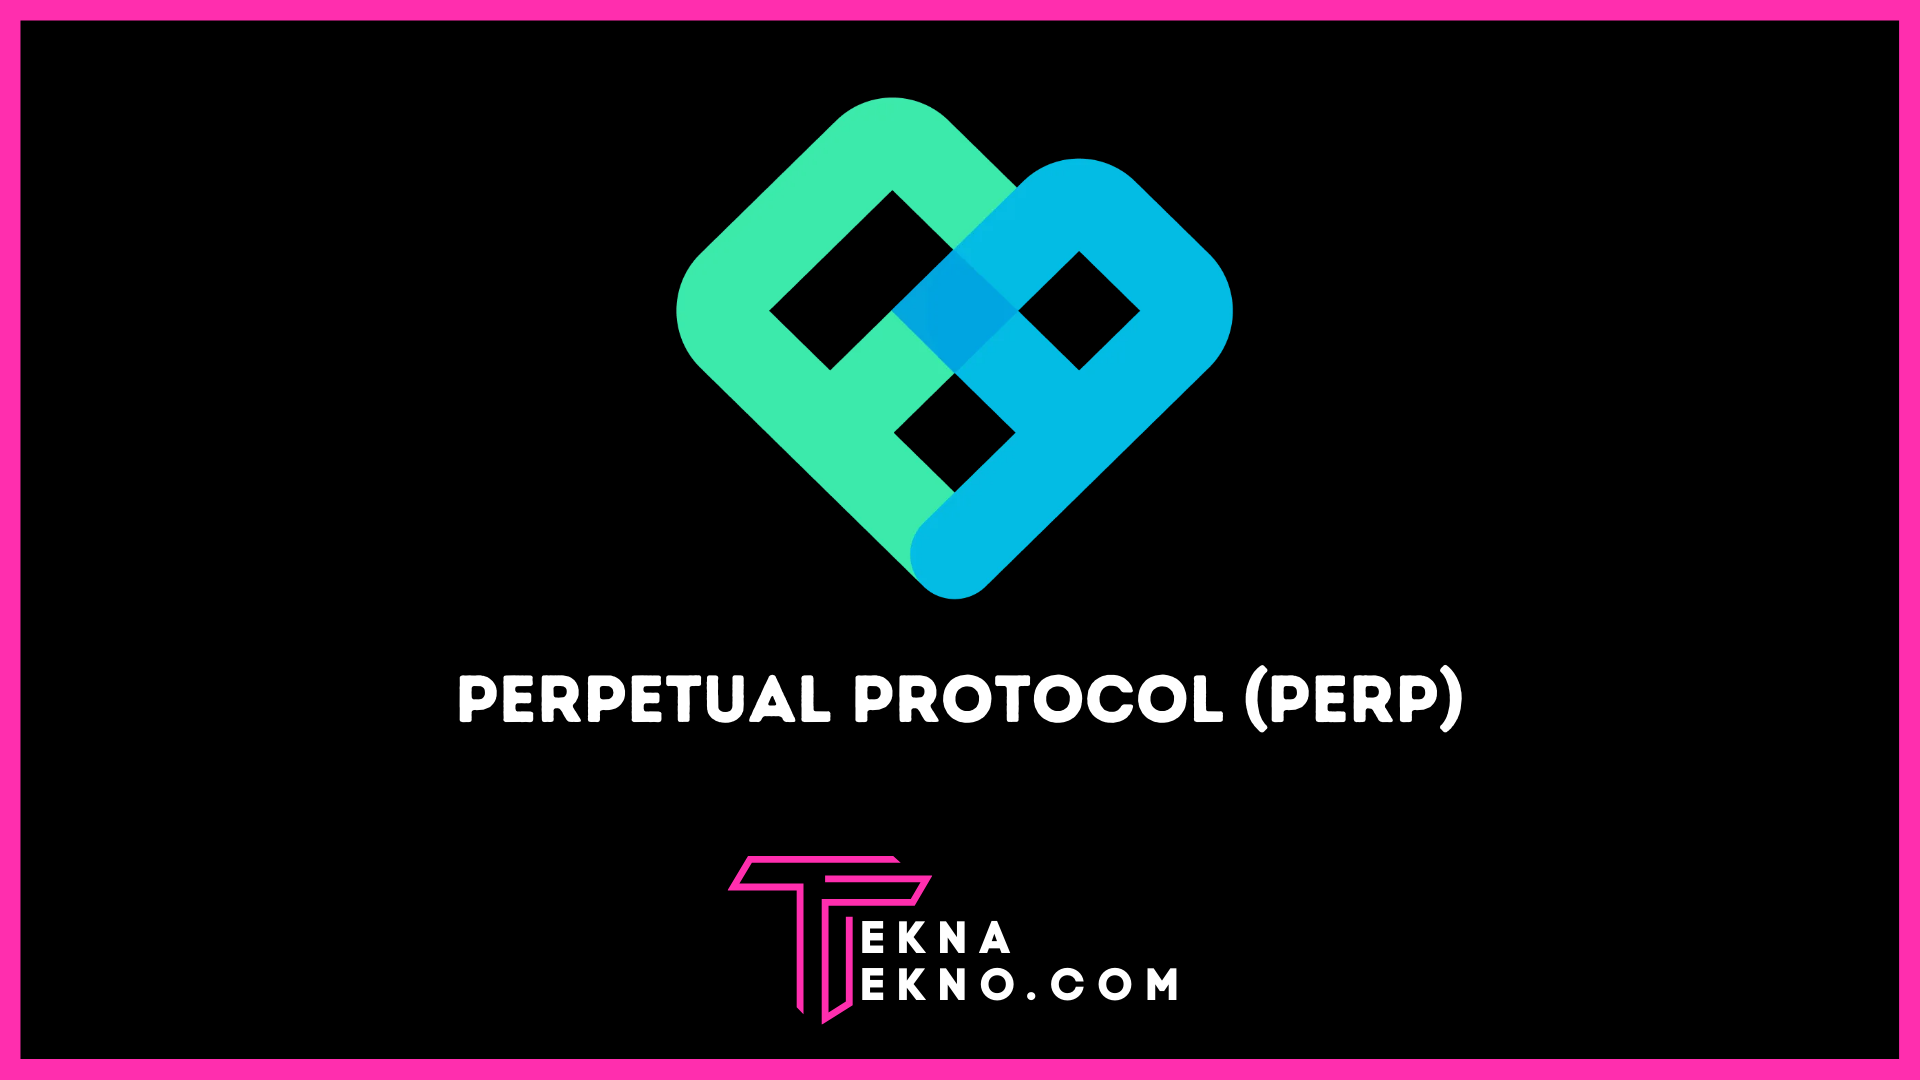 Perpetual Protocol (PERP), Aset Kripto Milik Platform DEXPerpetual Protocol (PERP), Aset Kripto Milik Platform DEX